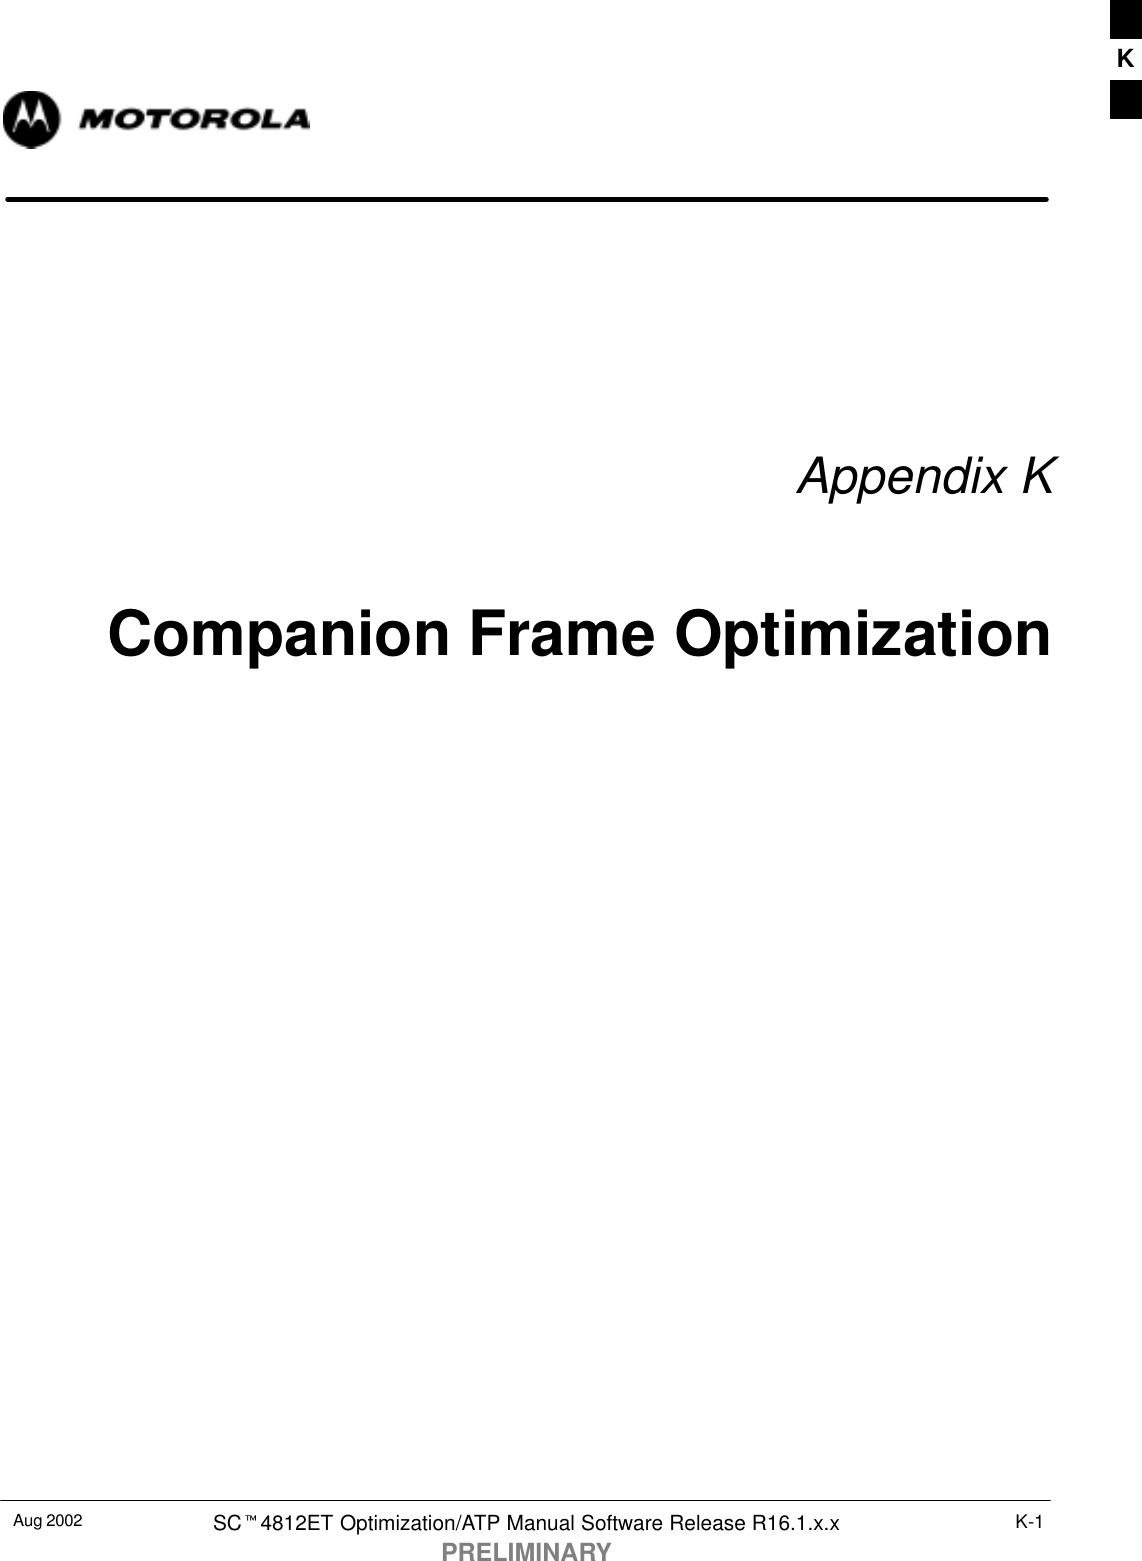 Aug 2002 SCt4812ET Optimization/ATP Manual Software Release R16.1.x.xPRELIMINARYK-1Appendix KCompanion Frame OptimizationK